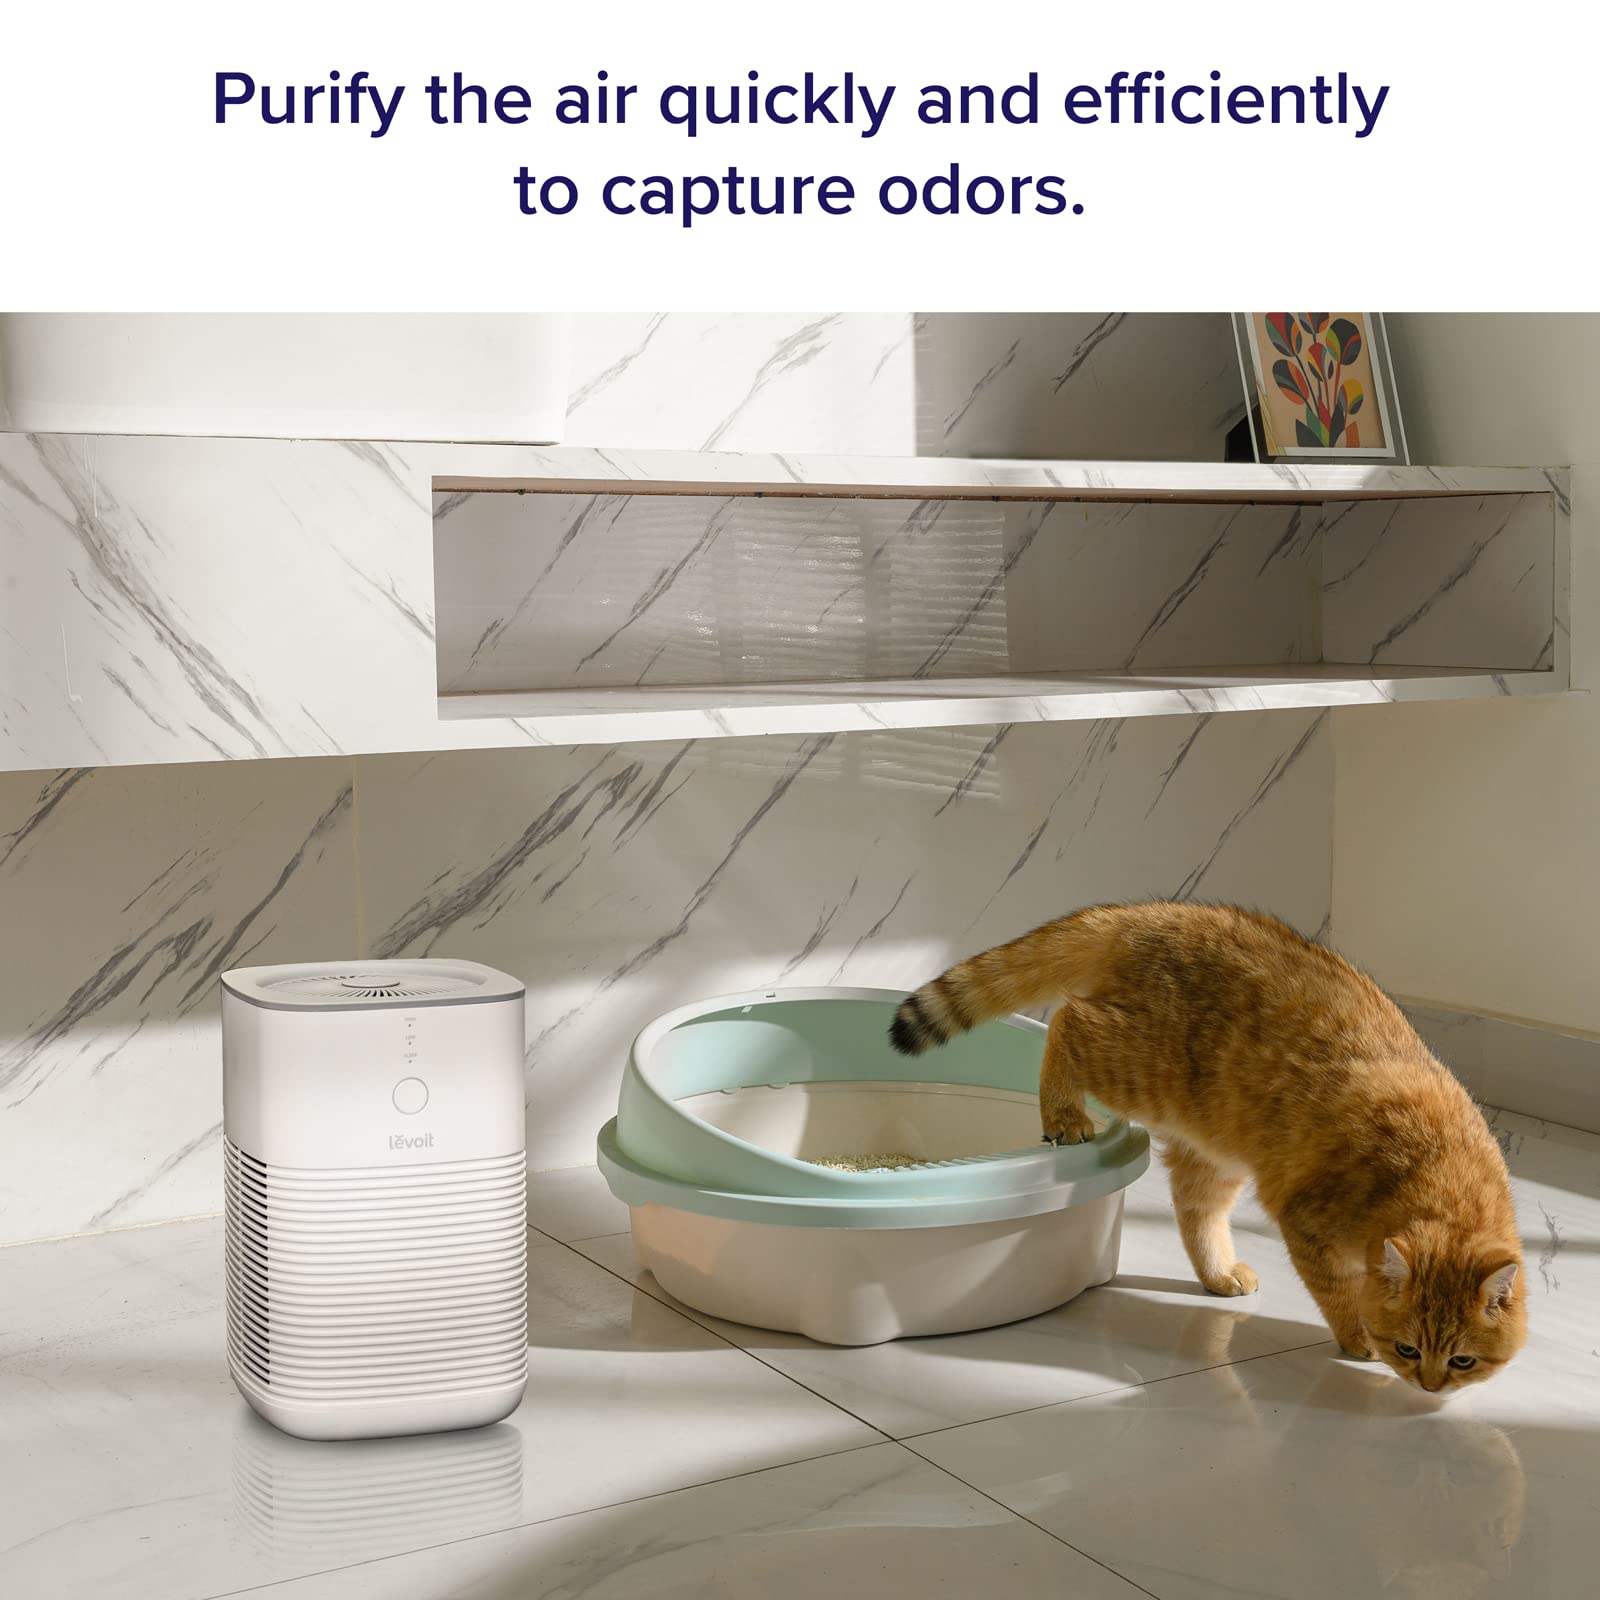 Levoit Air Purifier for Home Bedroom, HEPA Fresheners Filter Small Room Cleaner with Fragrance Sponge for Smoke, Allergies, Pet Dander, Odor, Dust